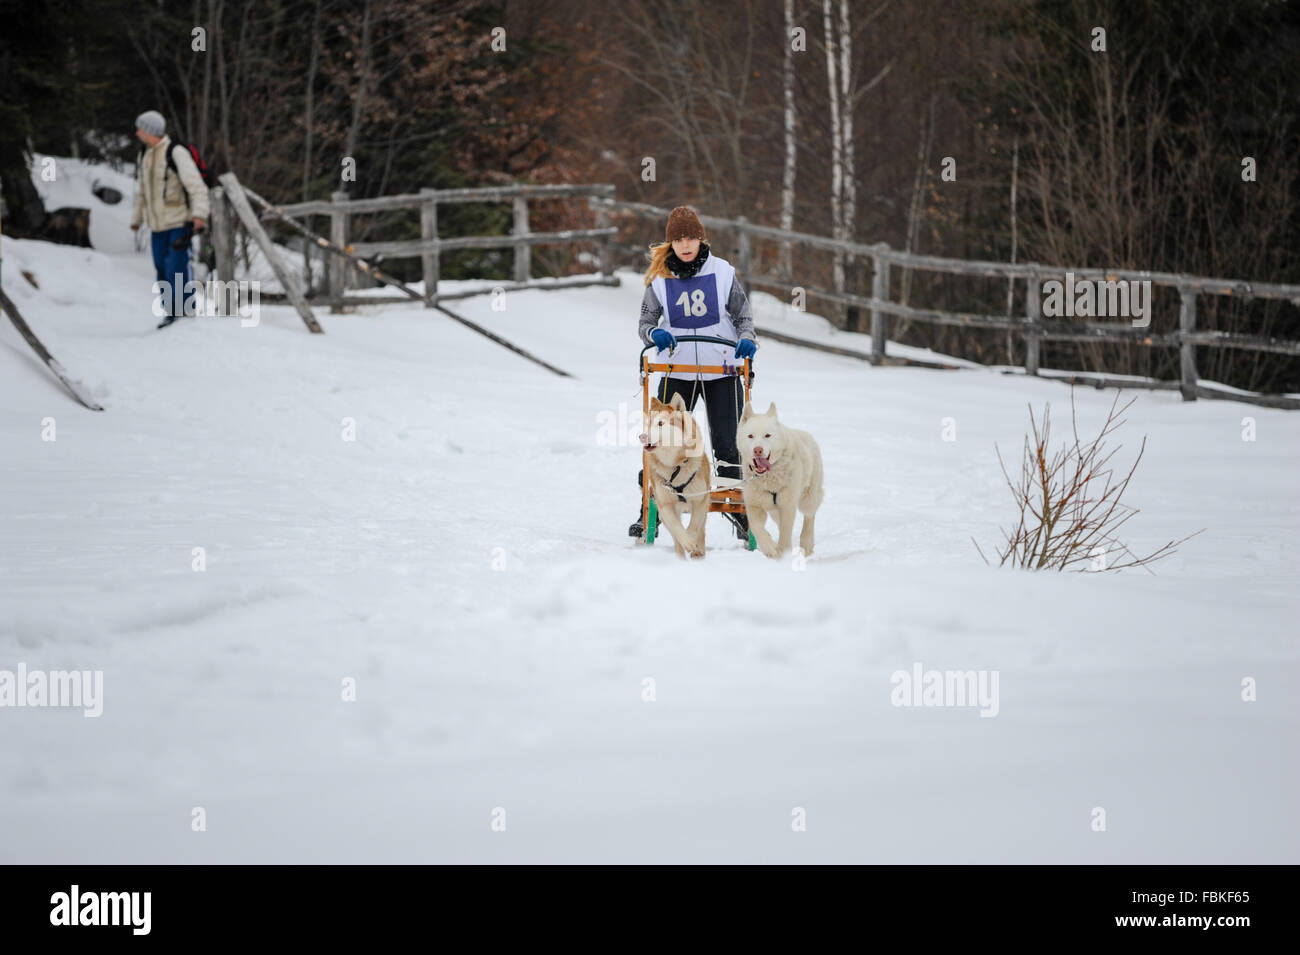 Sled dog racing with siberian huskies, malamutes, samoyeds, nordic dogs. Photo taken in Transylvania, Romania. Stock Photo